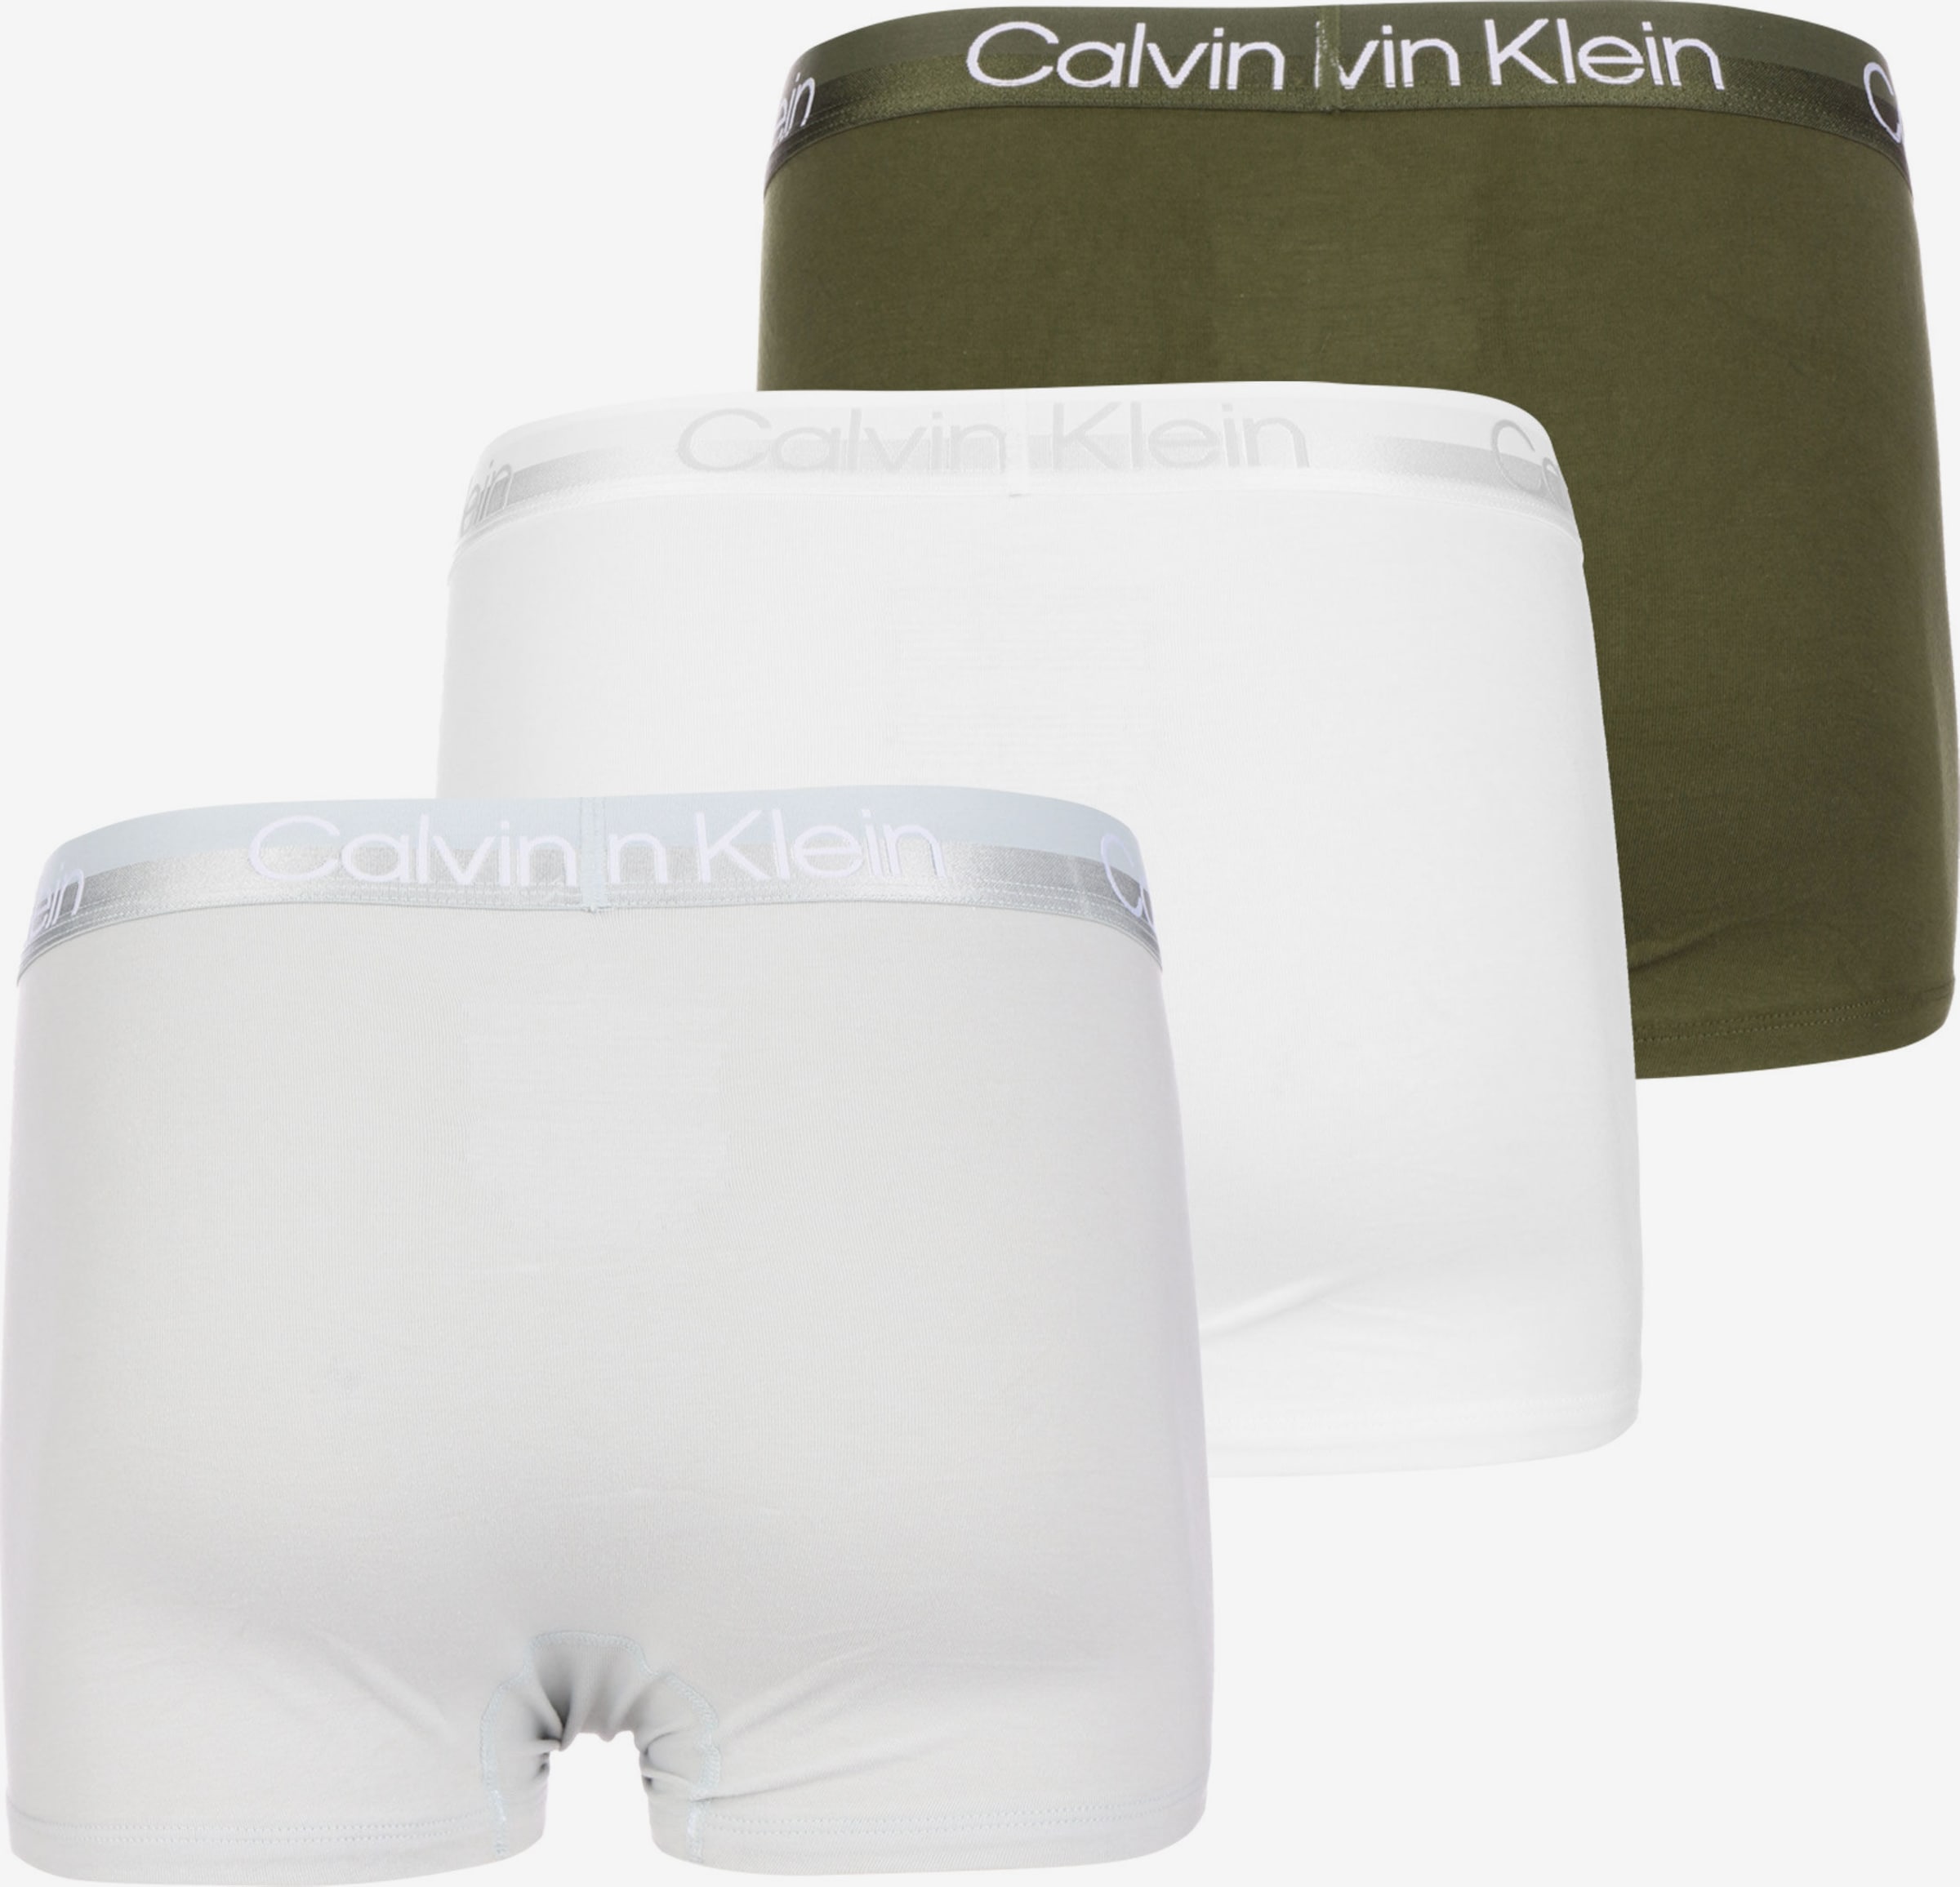 Calvin Klein Underwear Boxer shorts in Olive, White | ABOUT YOU